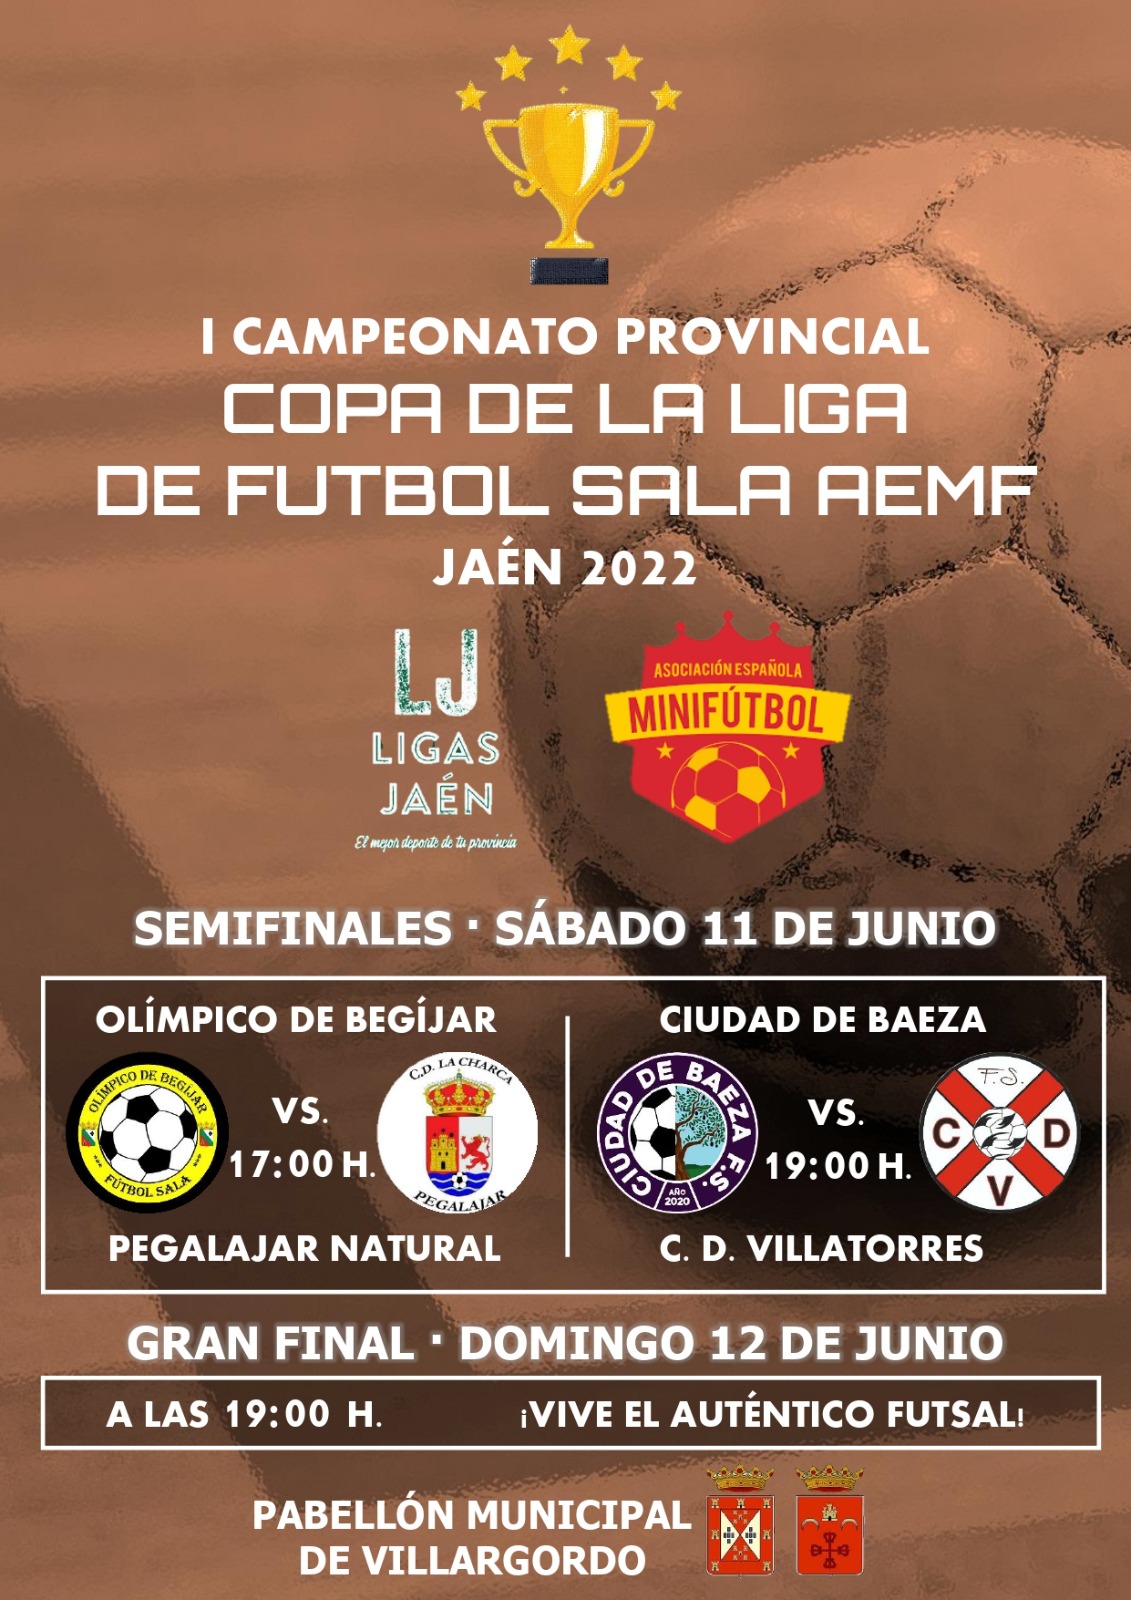 I Campeonato Provincial Copa de la Liga de Futbol Sala AEMF